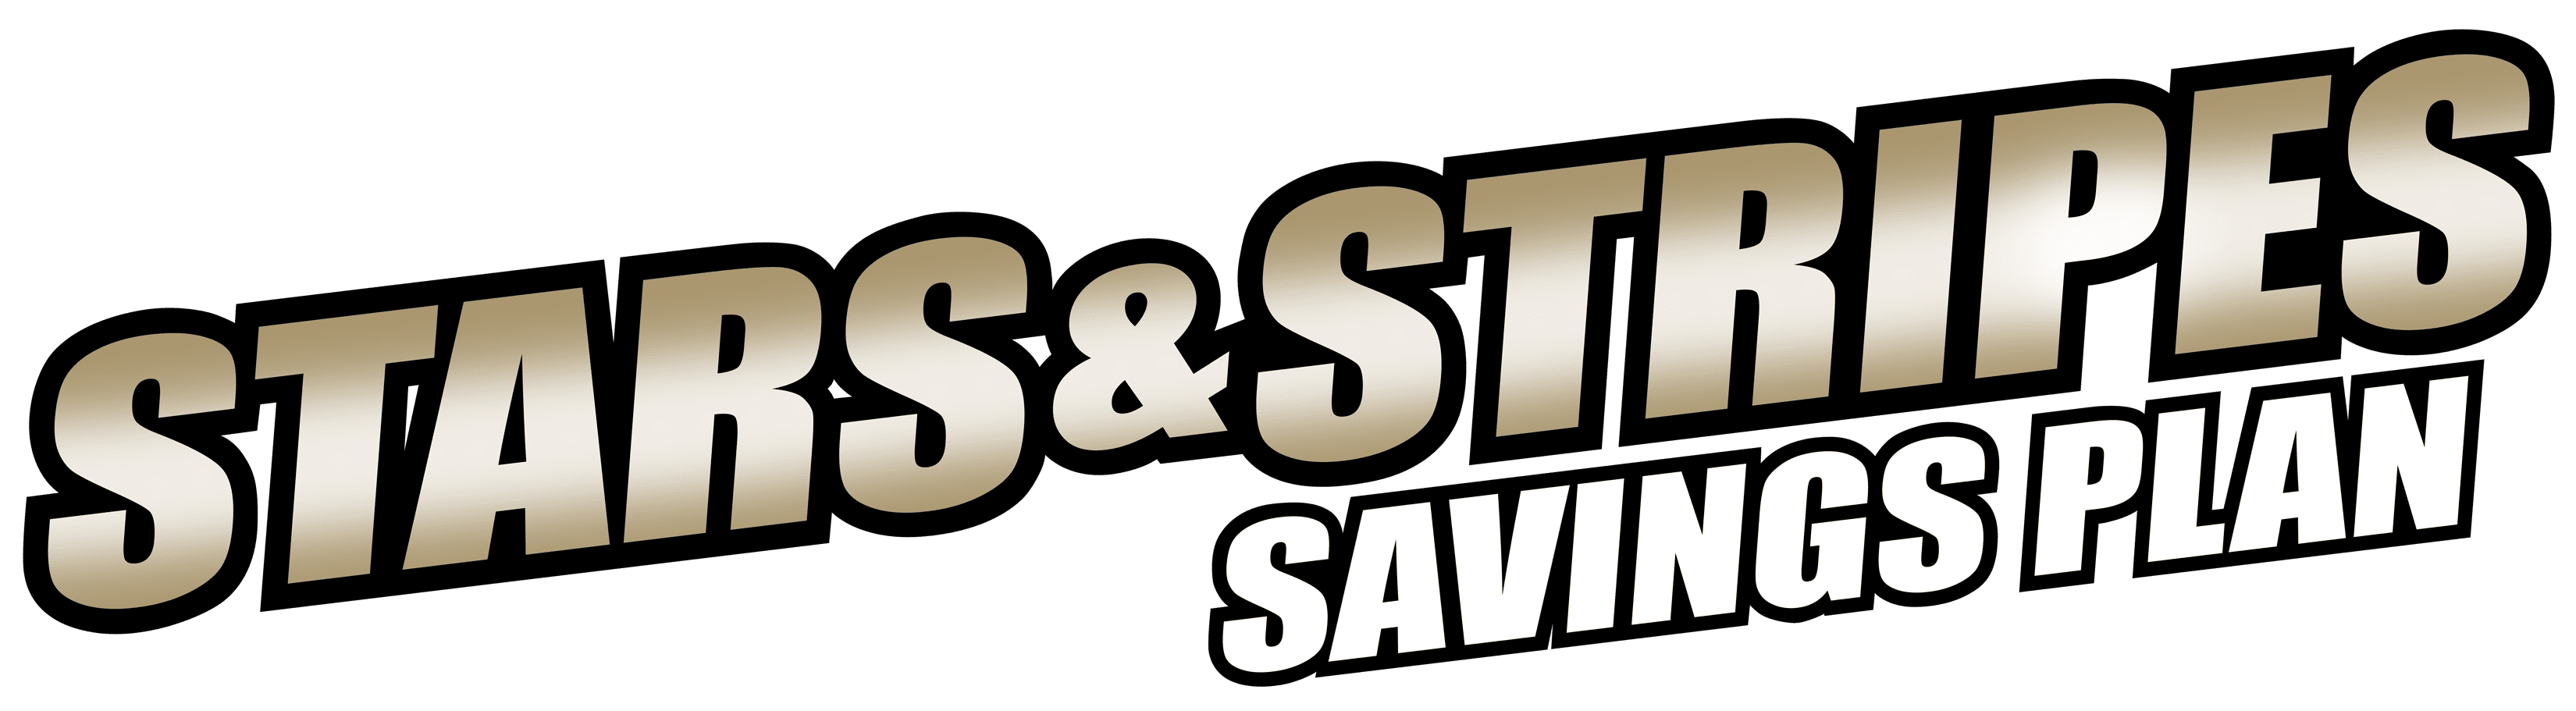 Stars & Stripes Savings Plan